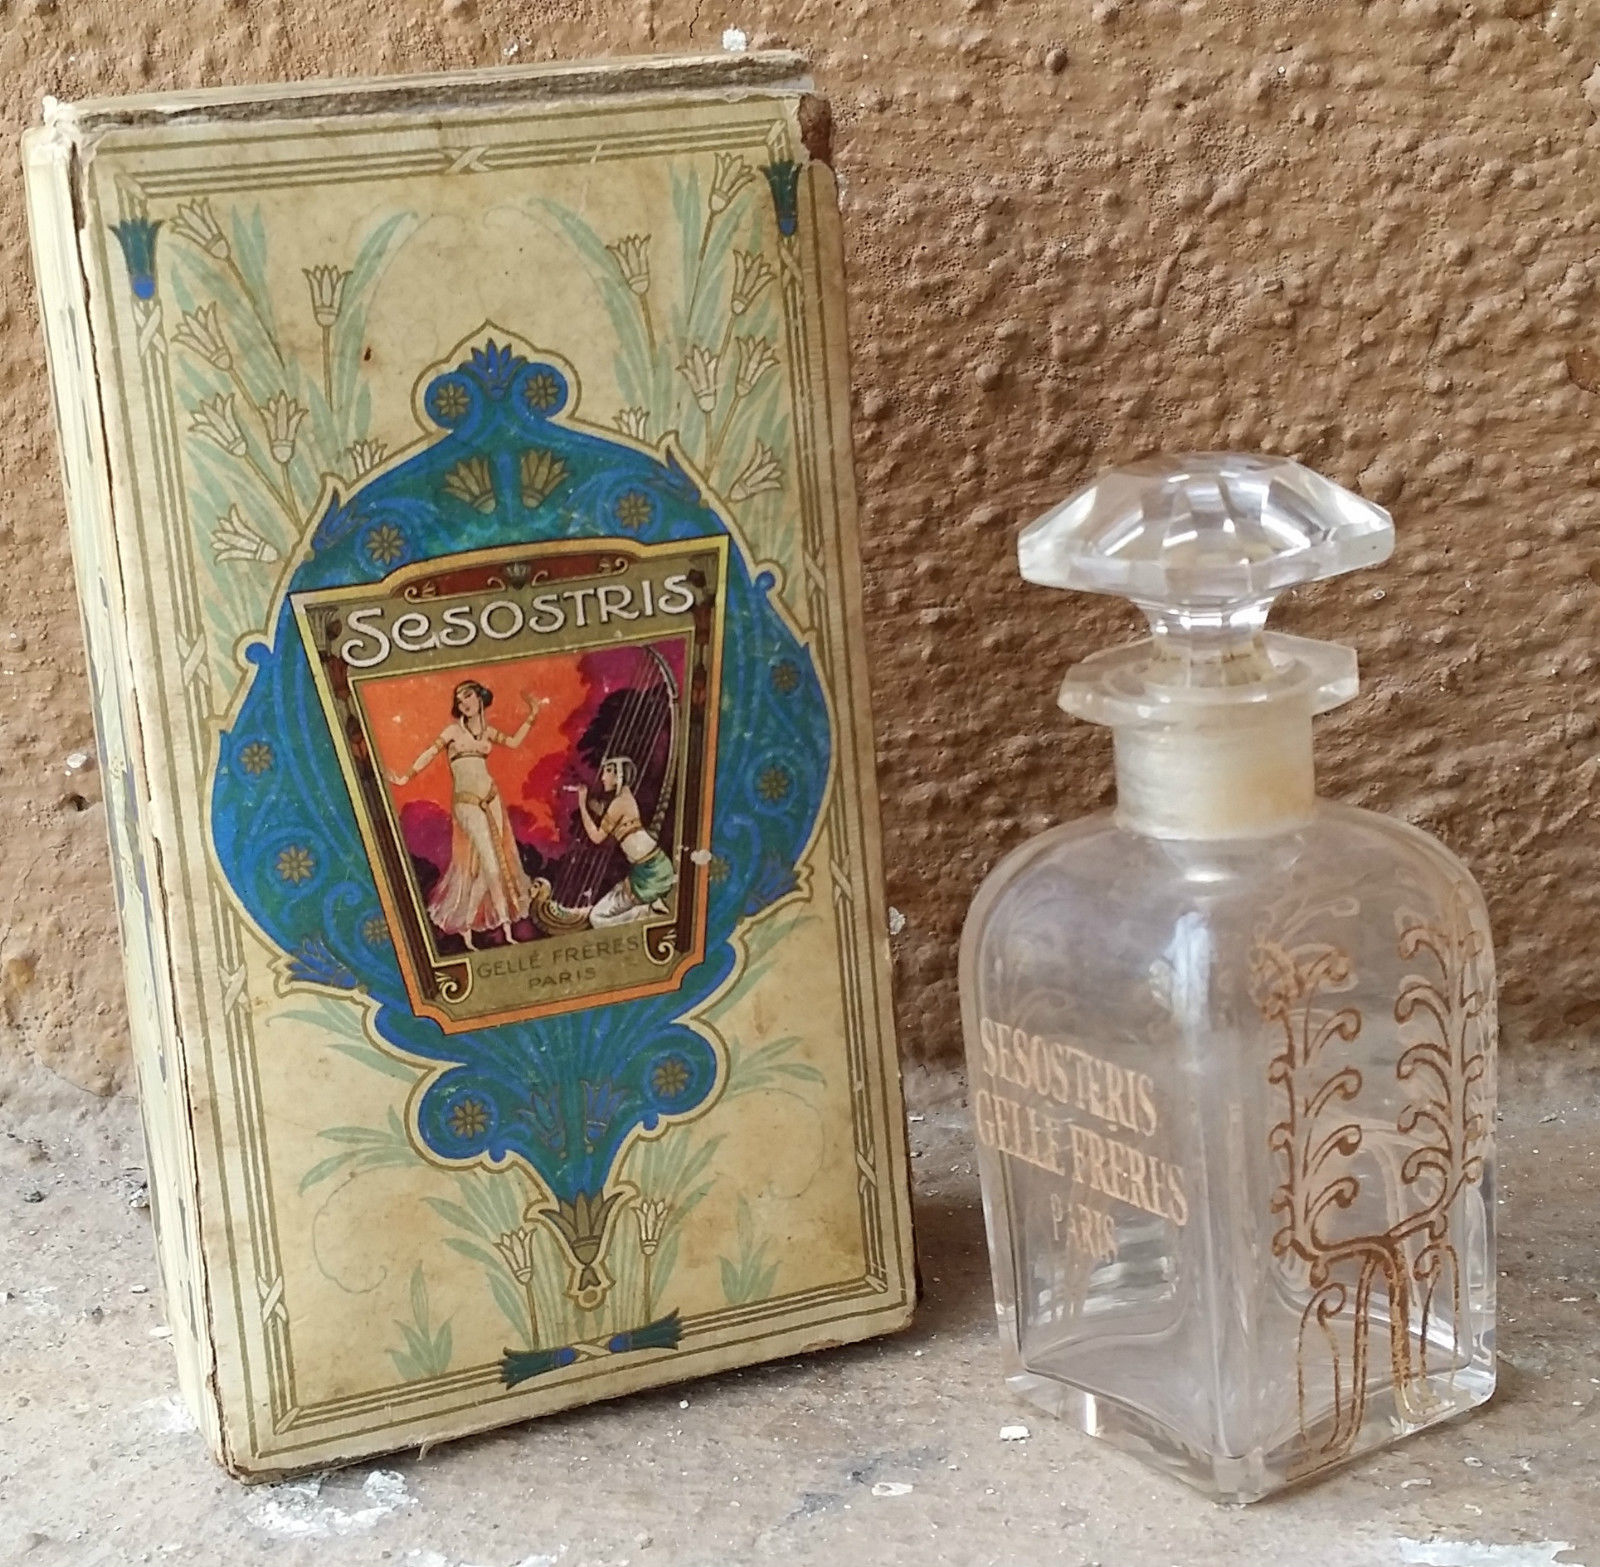 Cleopatra's Boudoir: Faking Perfume Bottles to Increase Their Value